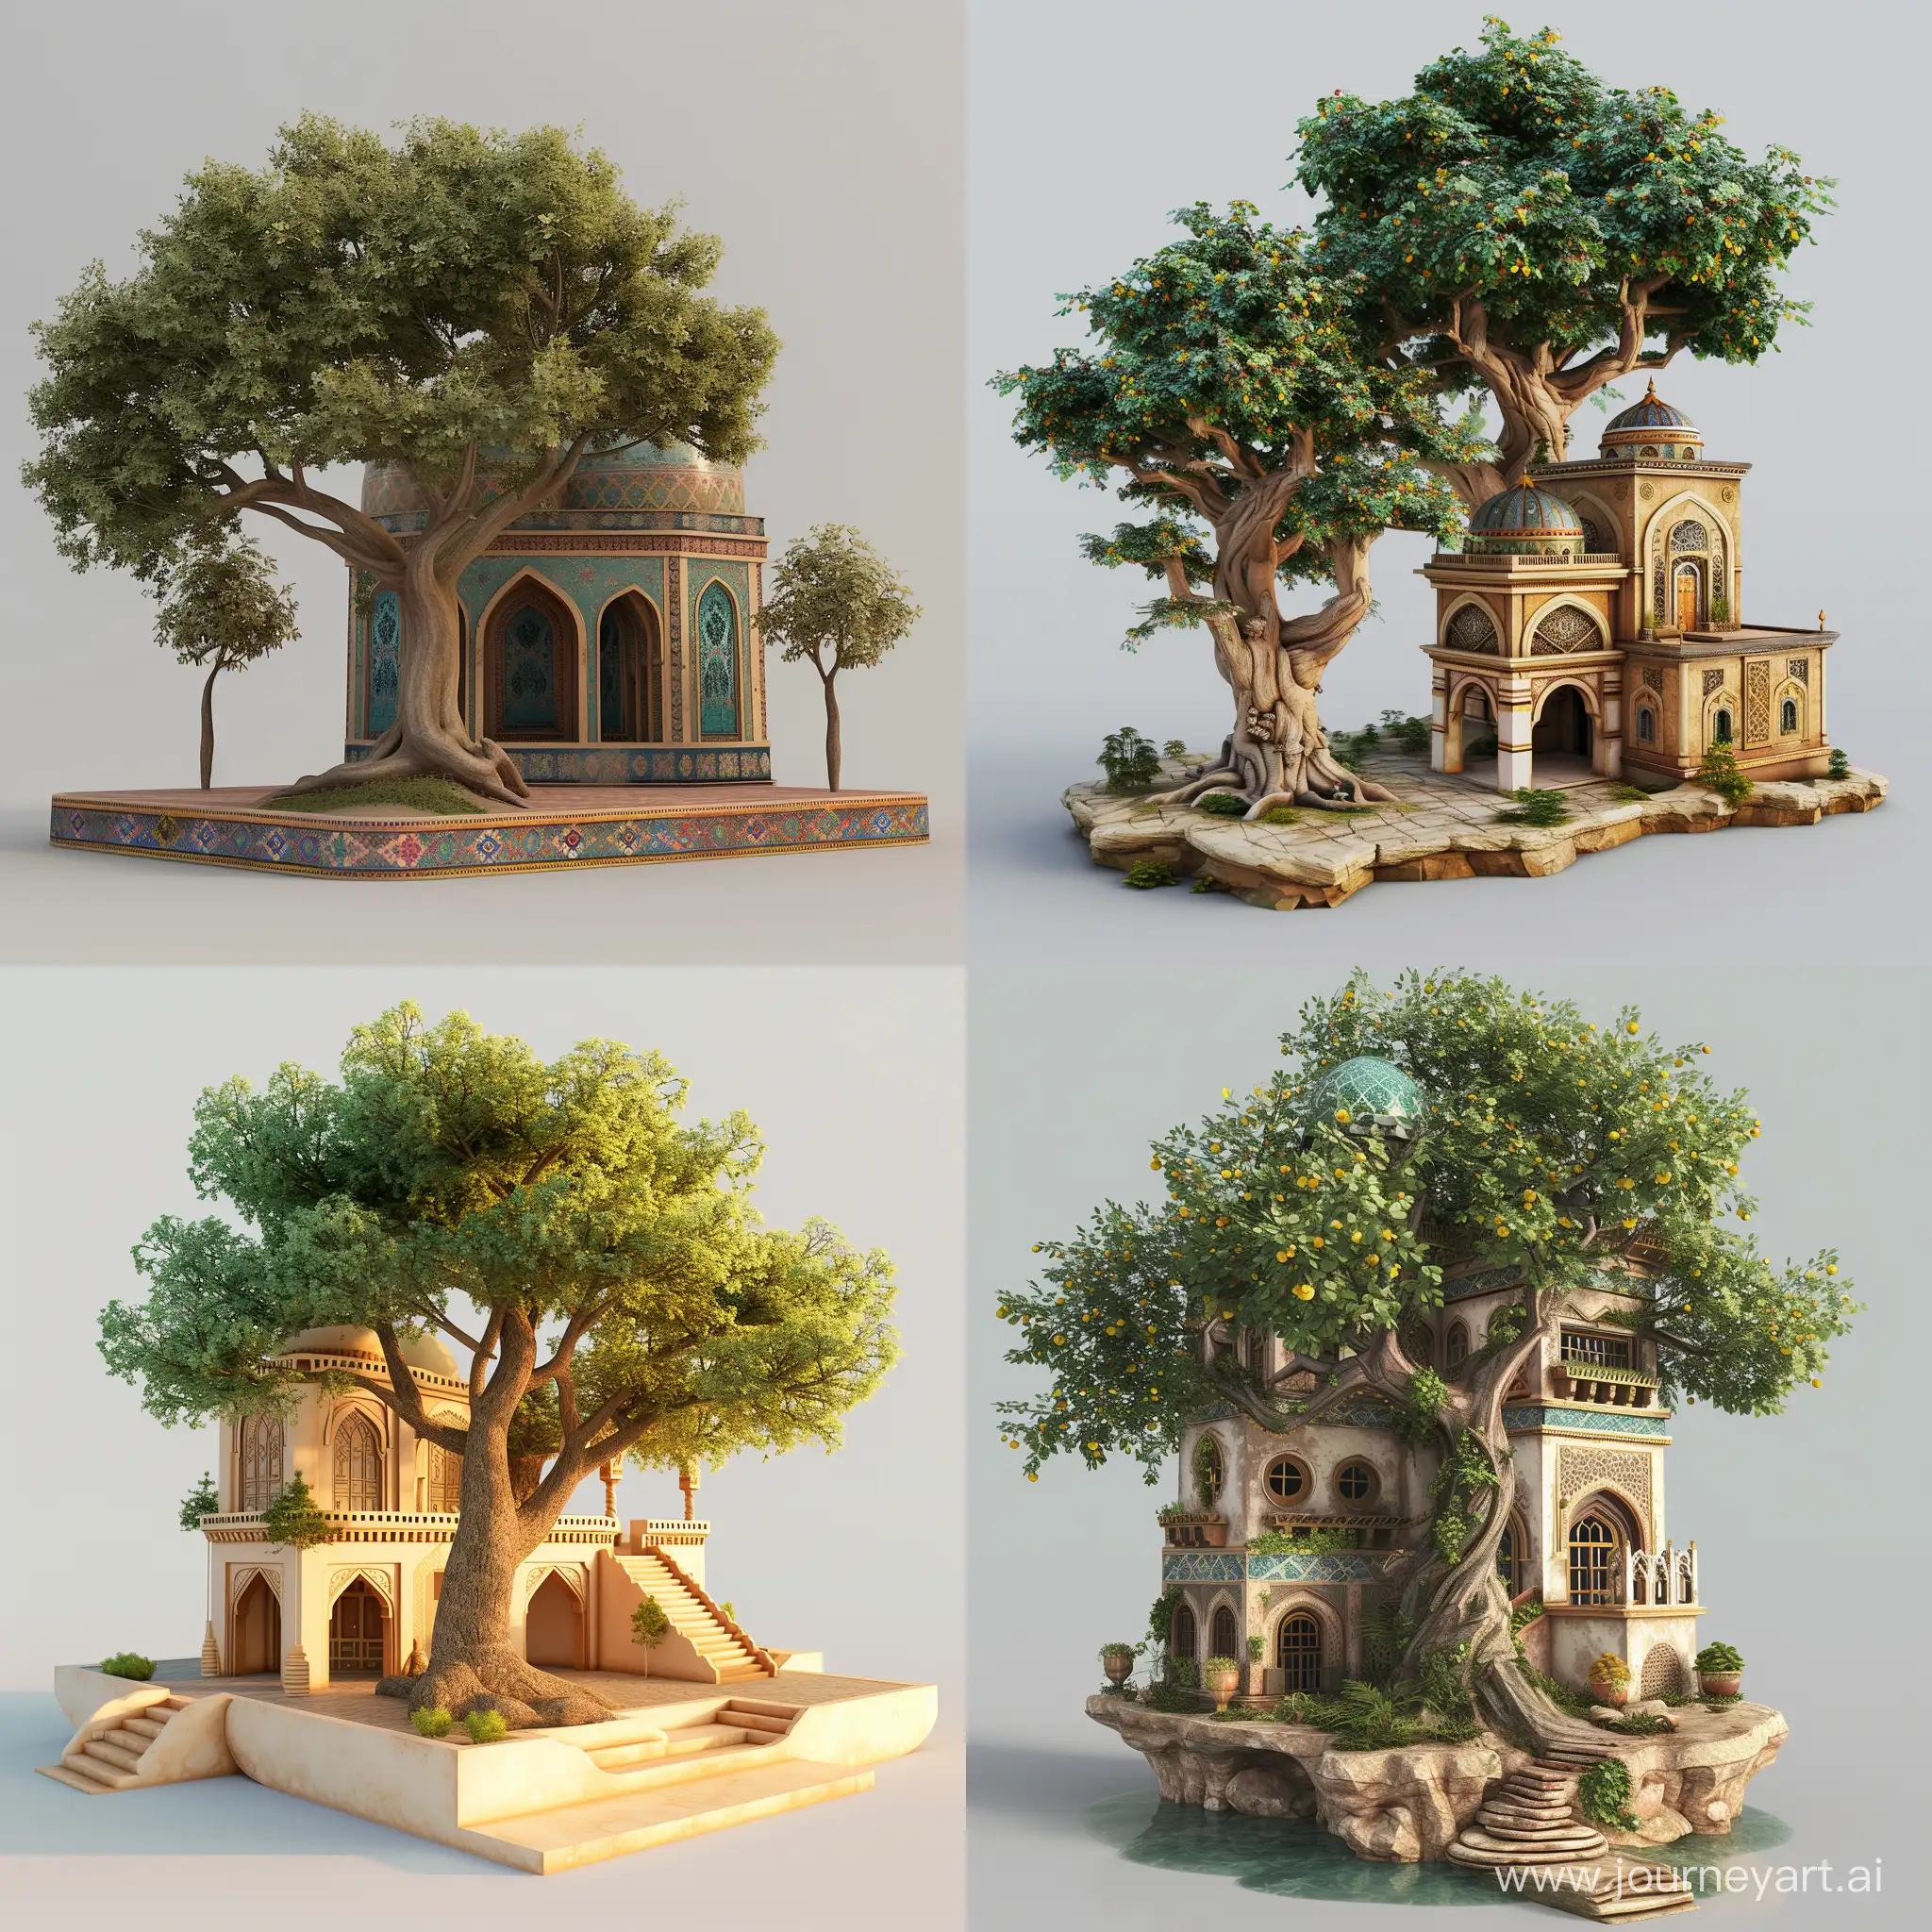 /imagine stylized 3d model tree building persian themed